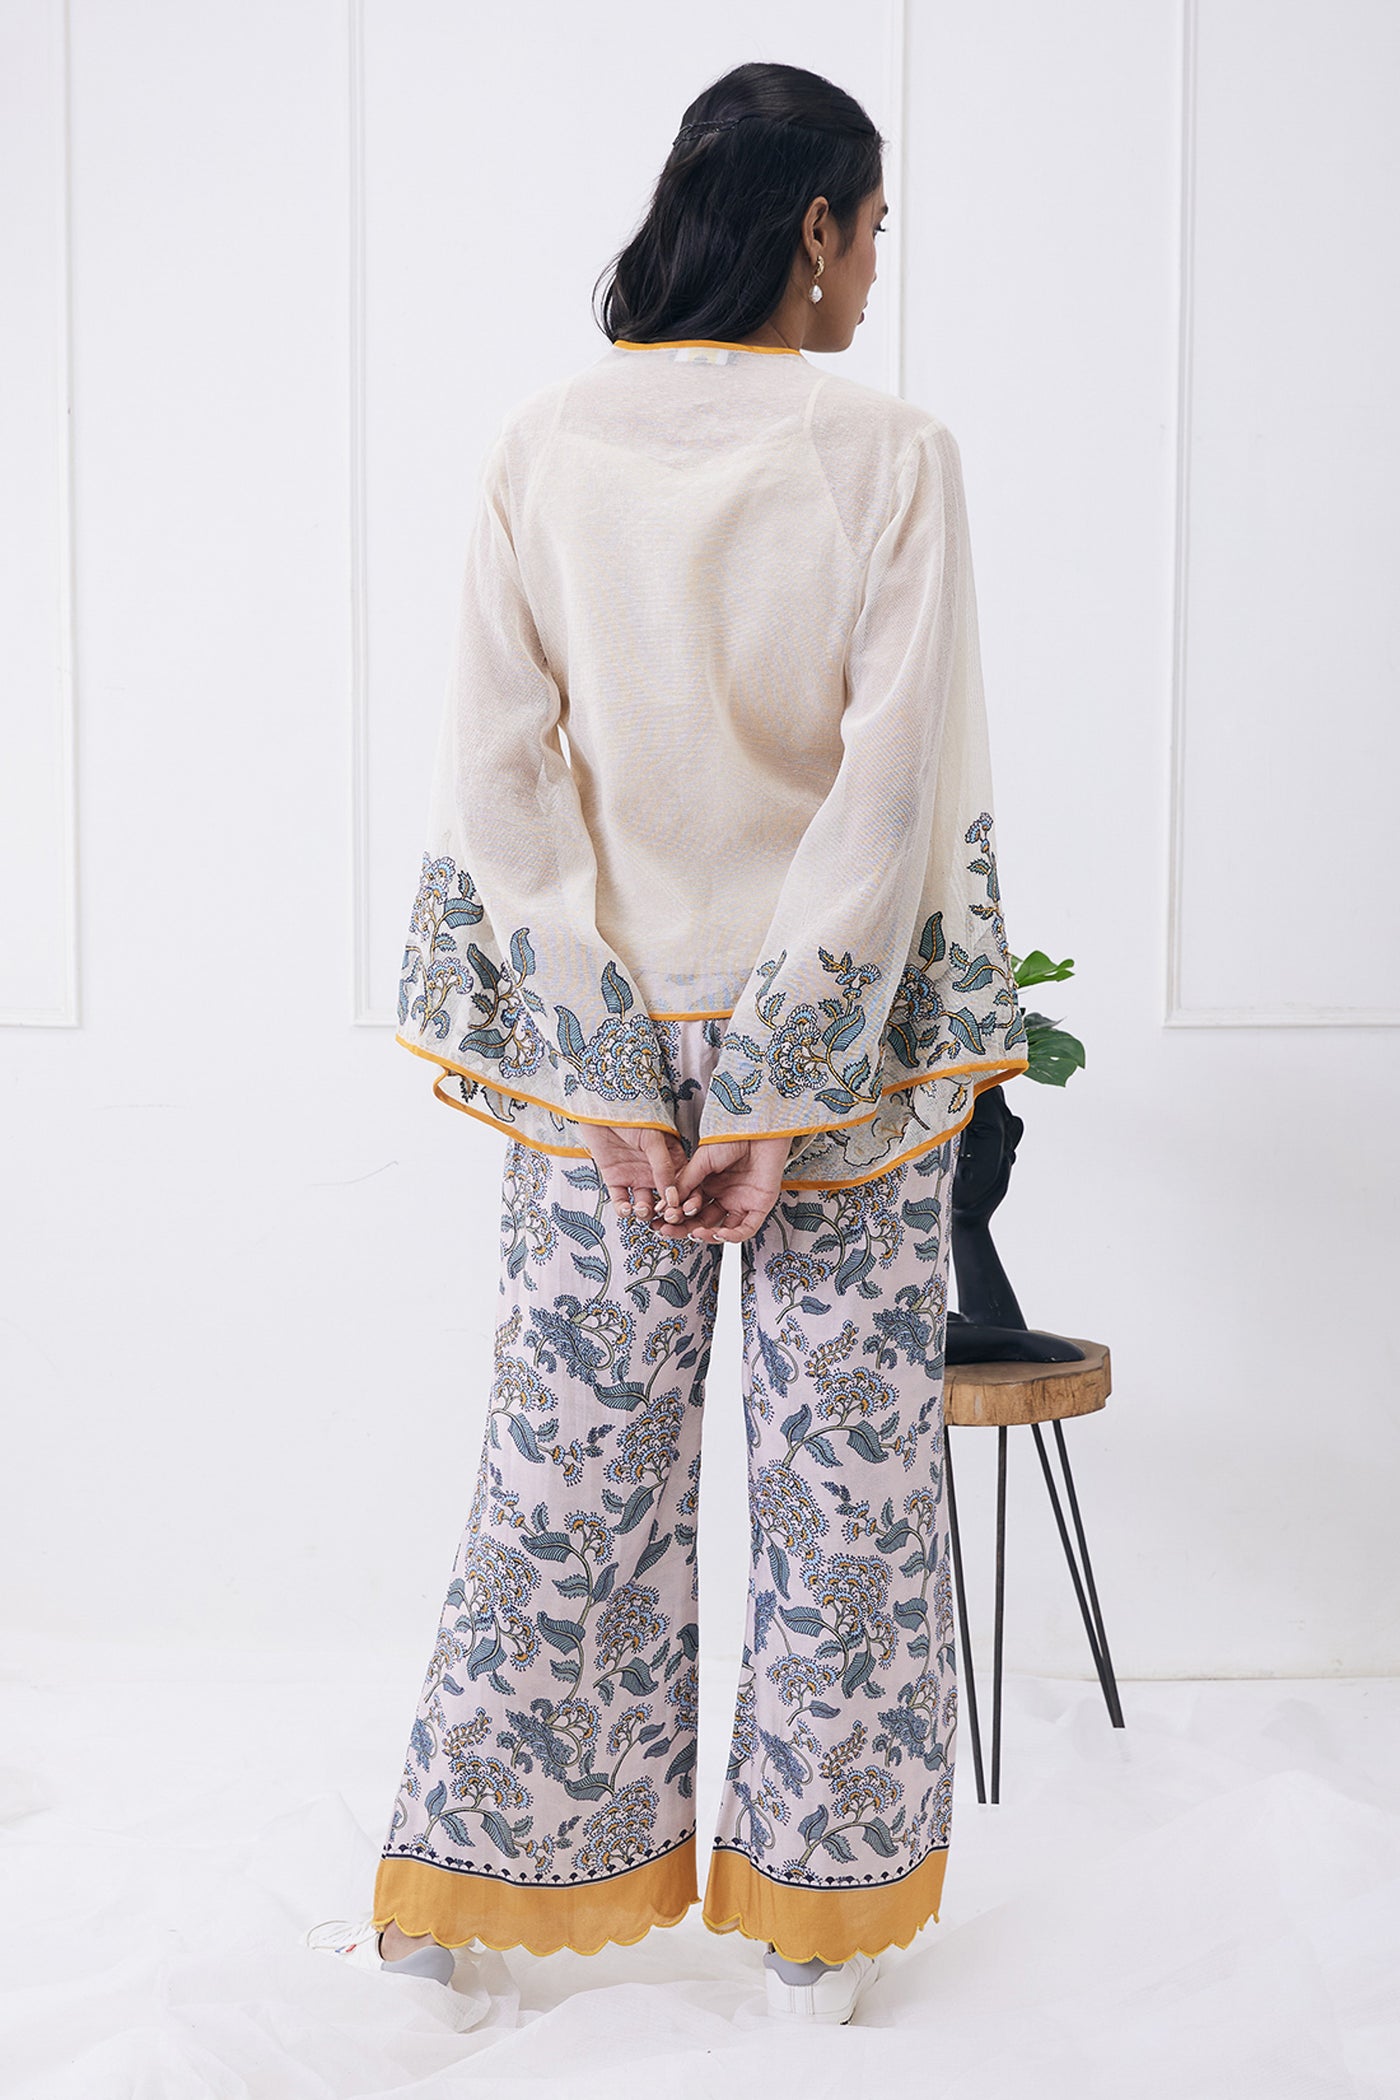 sougat paul Yasmin Printed Overlapped Top With Pants cream online shopping melange singapore indian designer wear